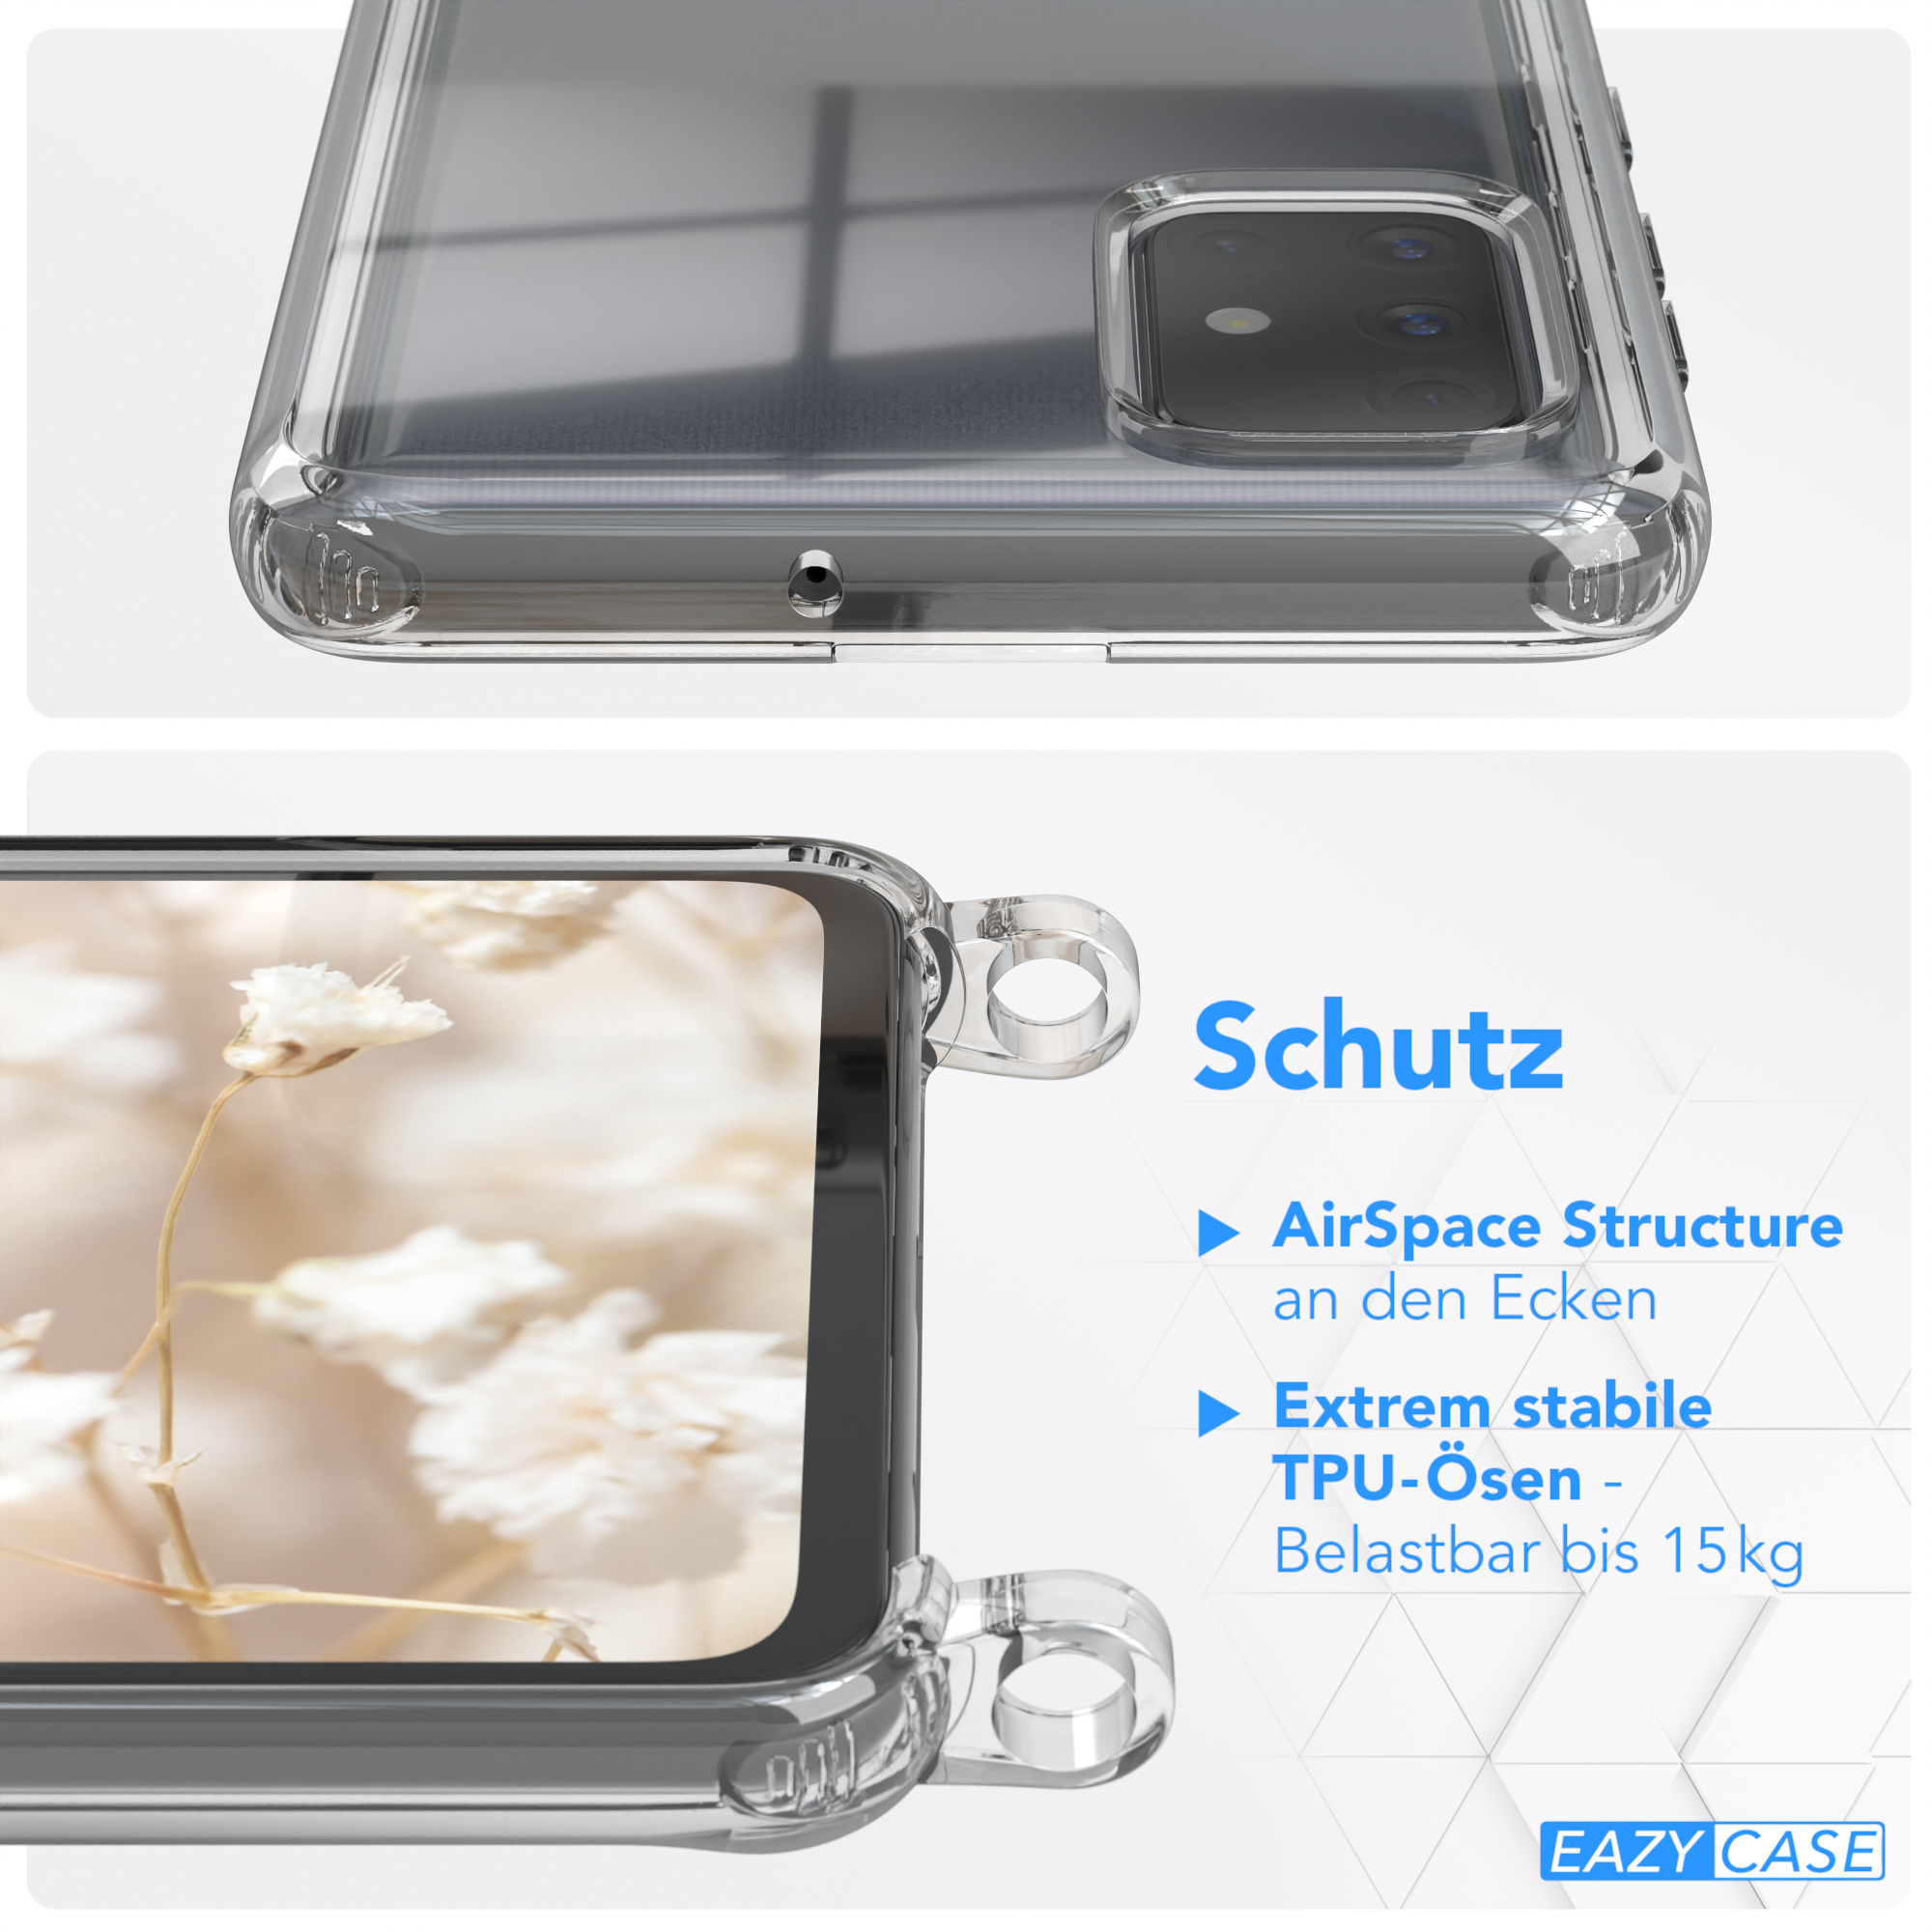 Rot Braun Samsung, CASE Style, mit Kordel Boho / Handyhülle Transparente EAZY Umhängetasche, A71, Galaxy